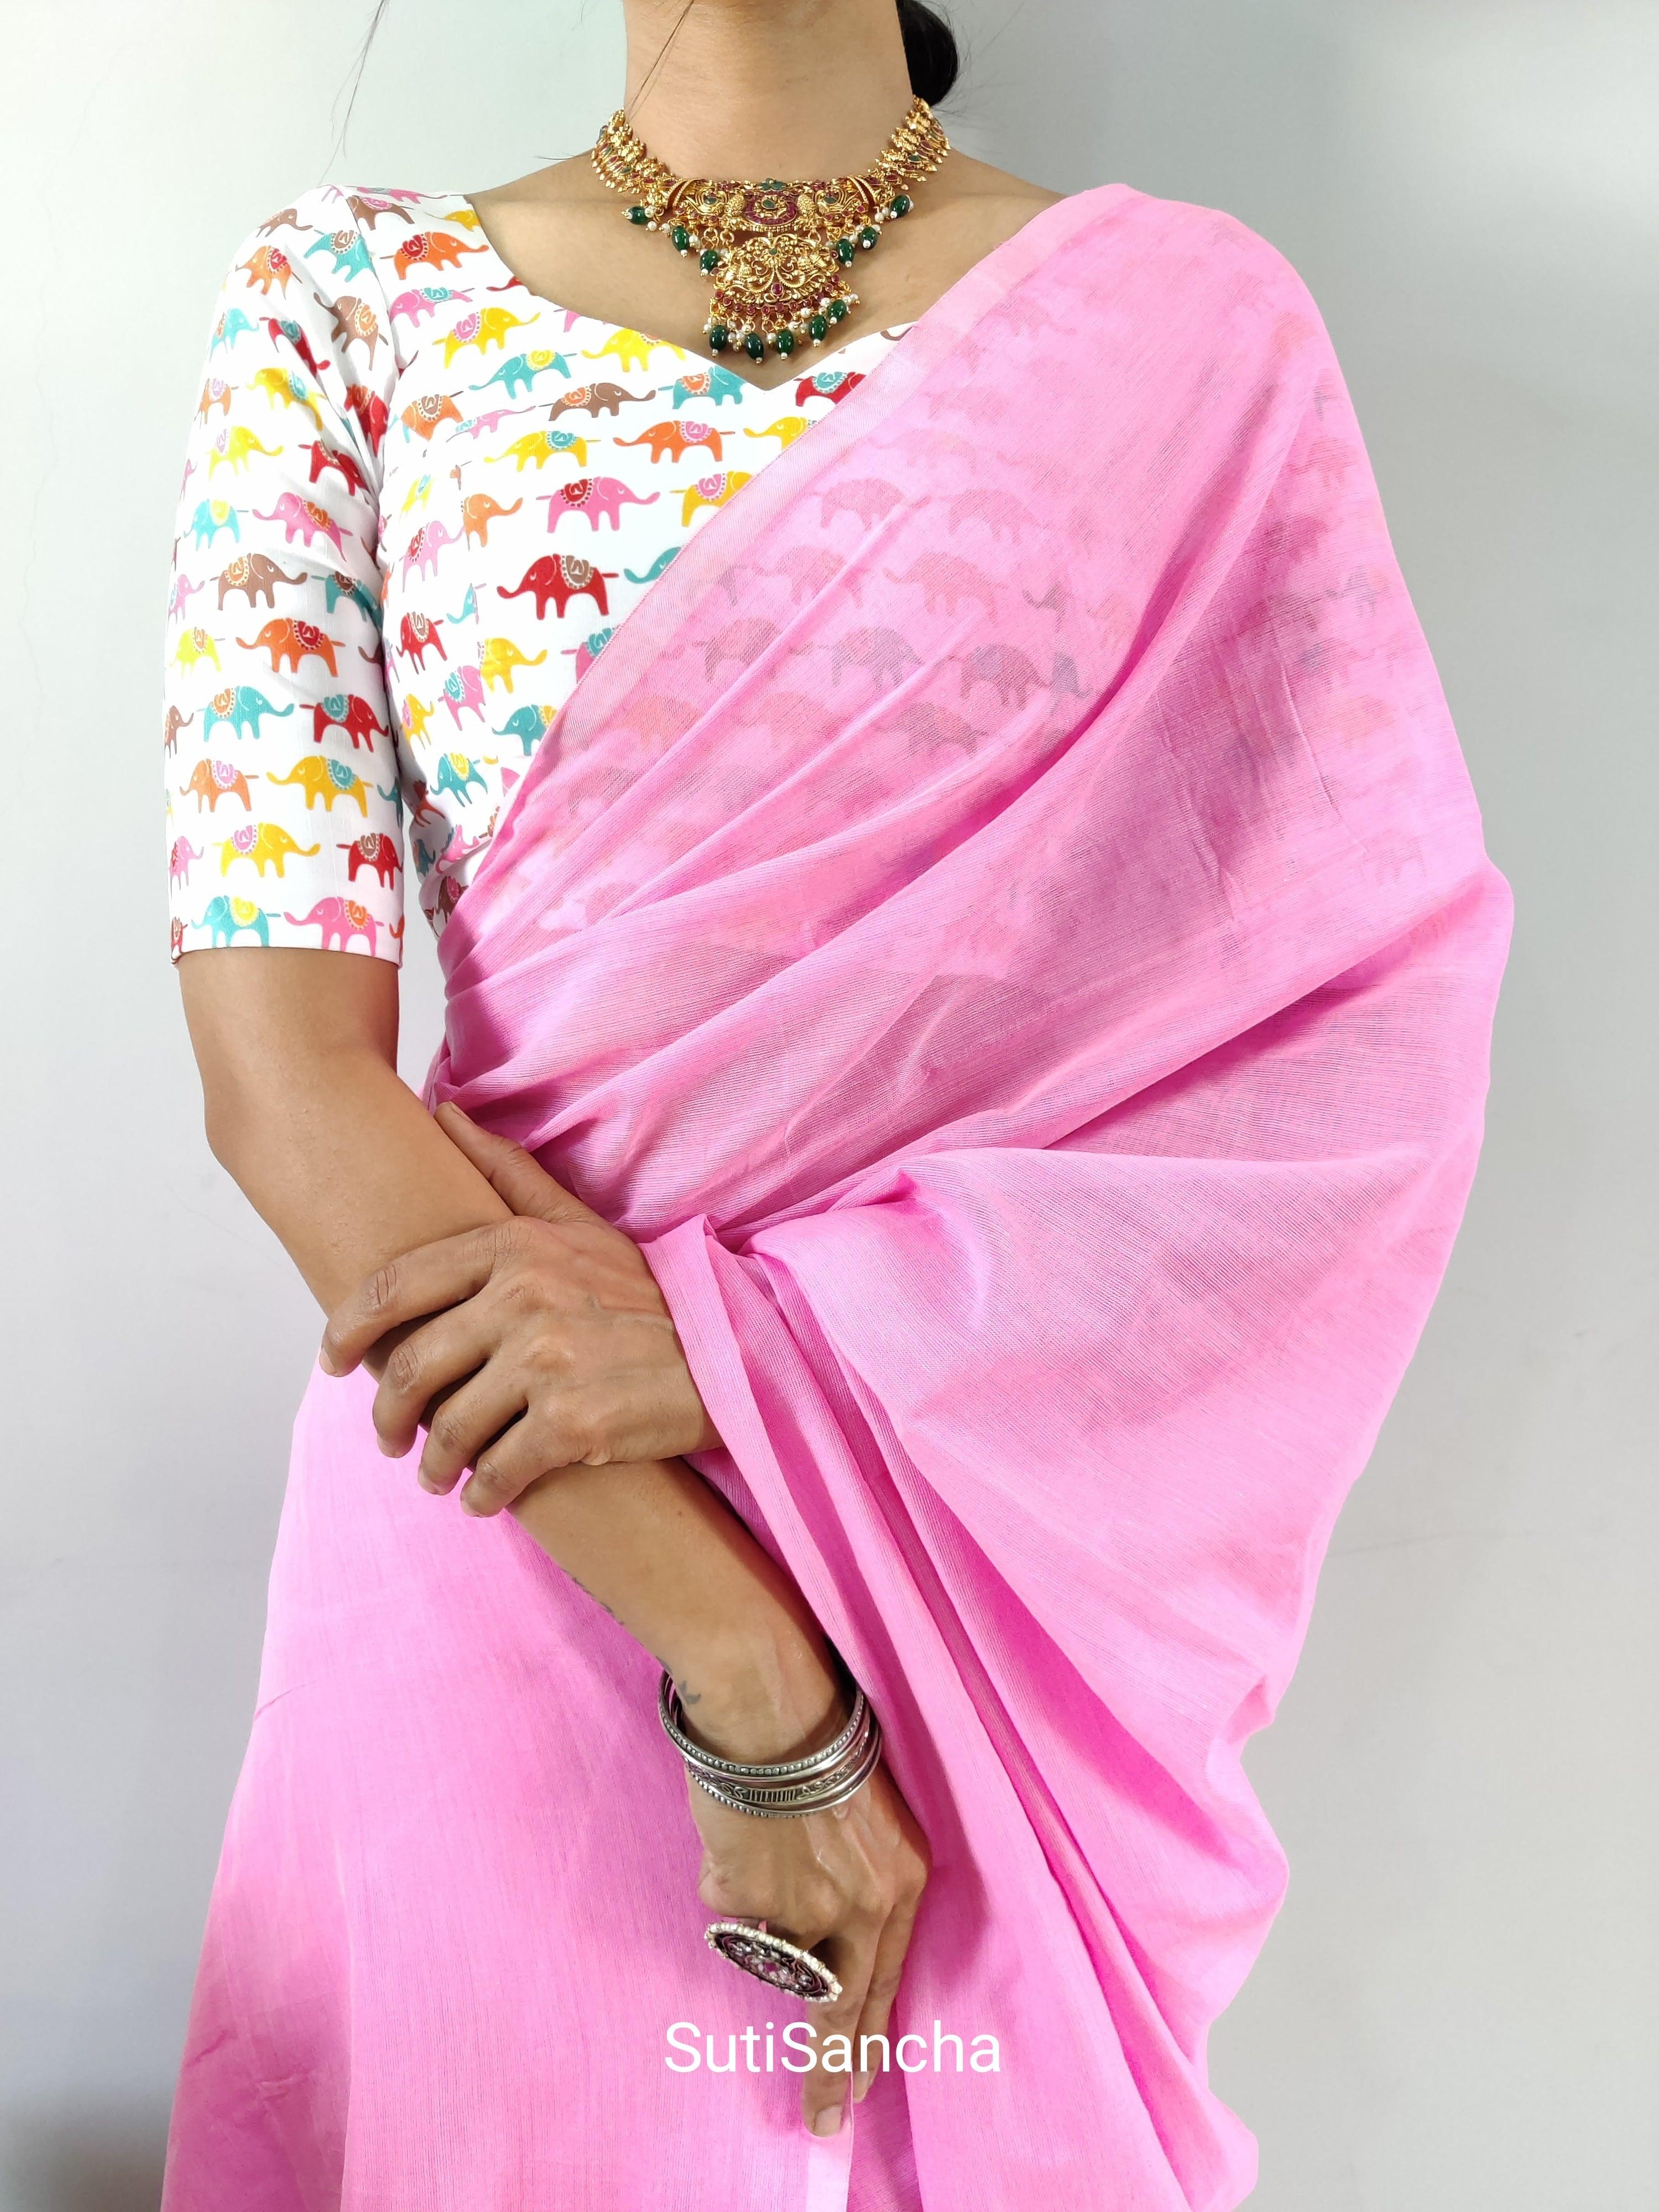 Sutisancha Babypink Khadi Saree & designer Blouse - Suti Sancha